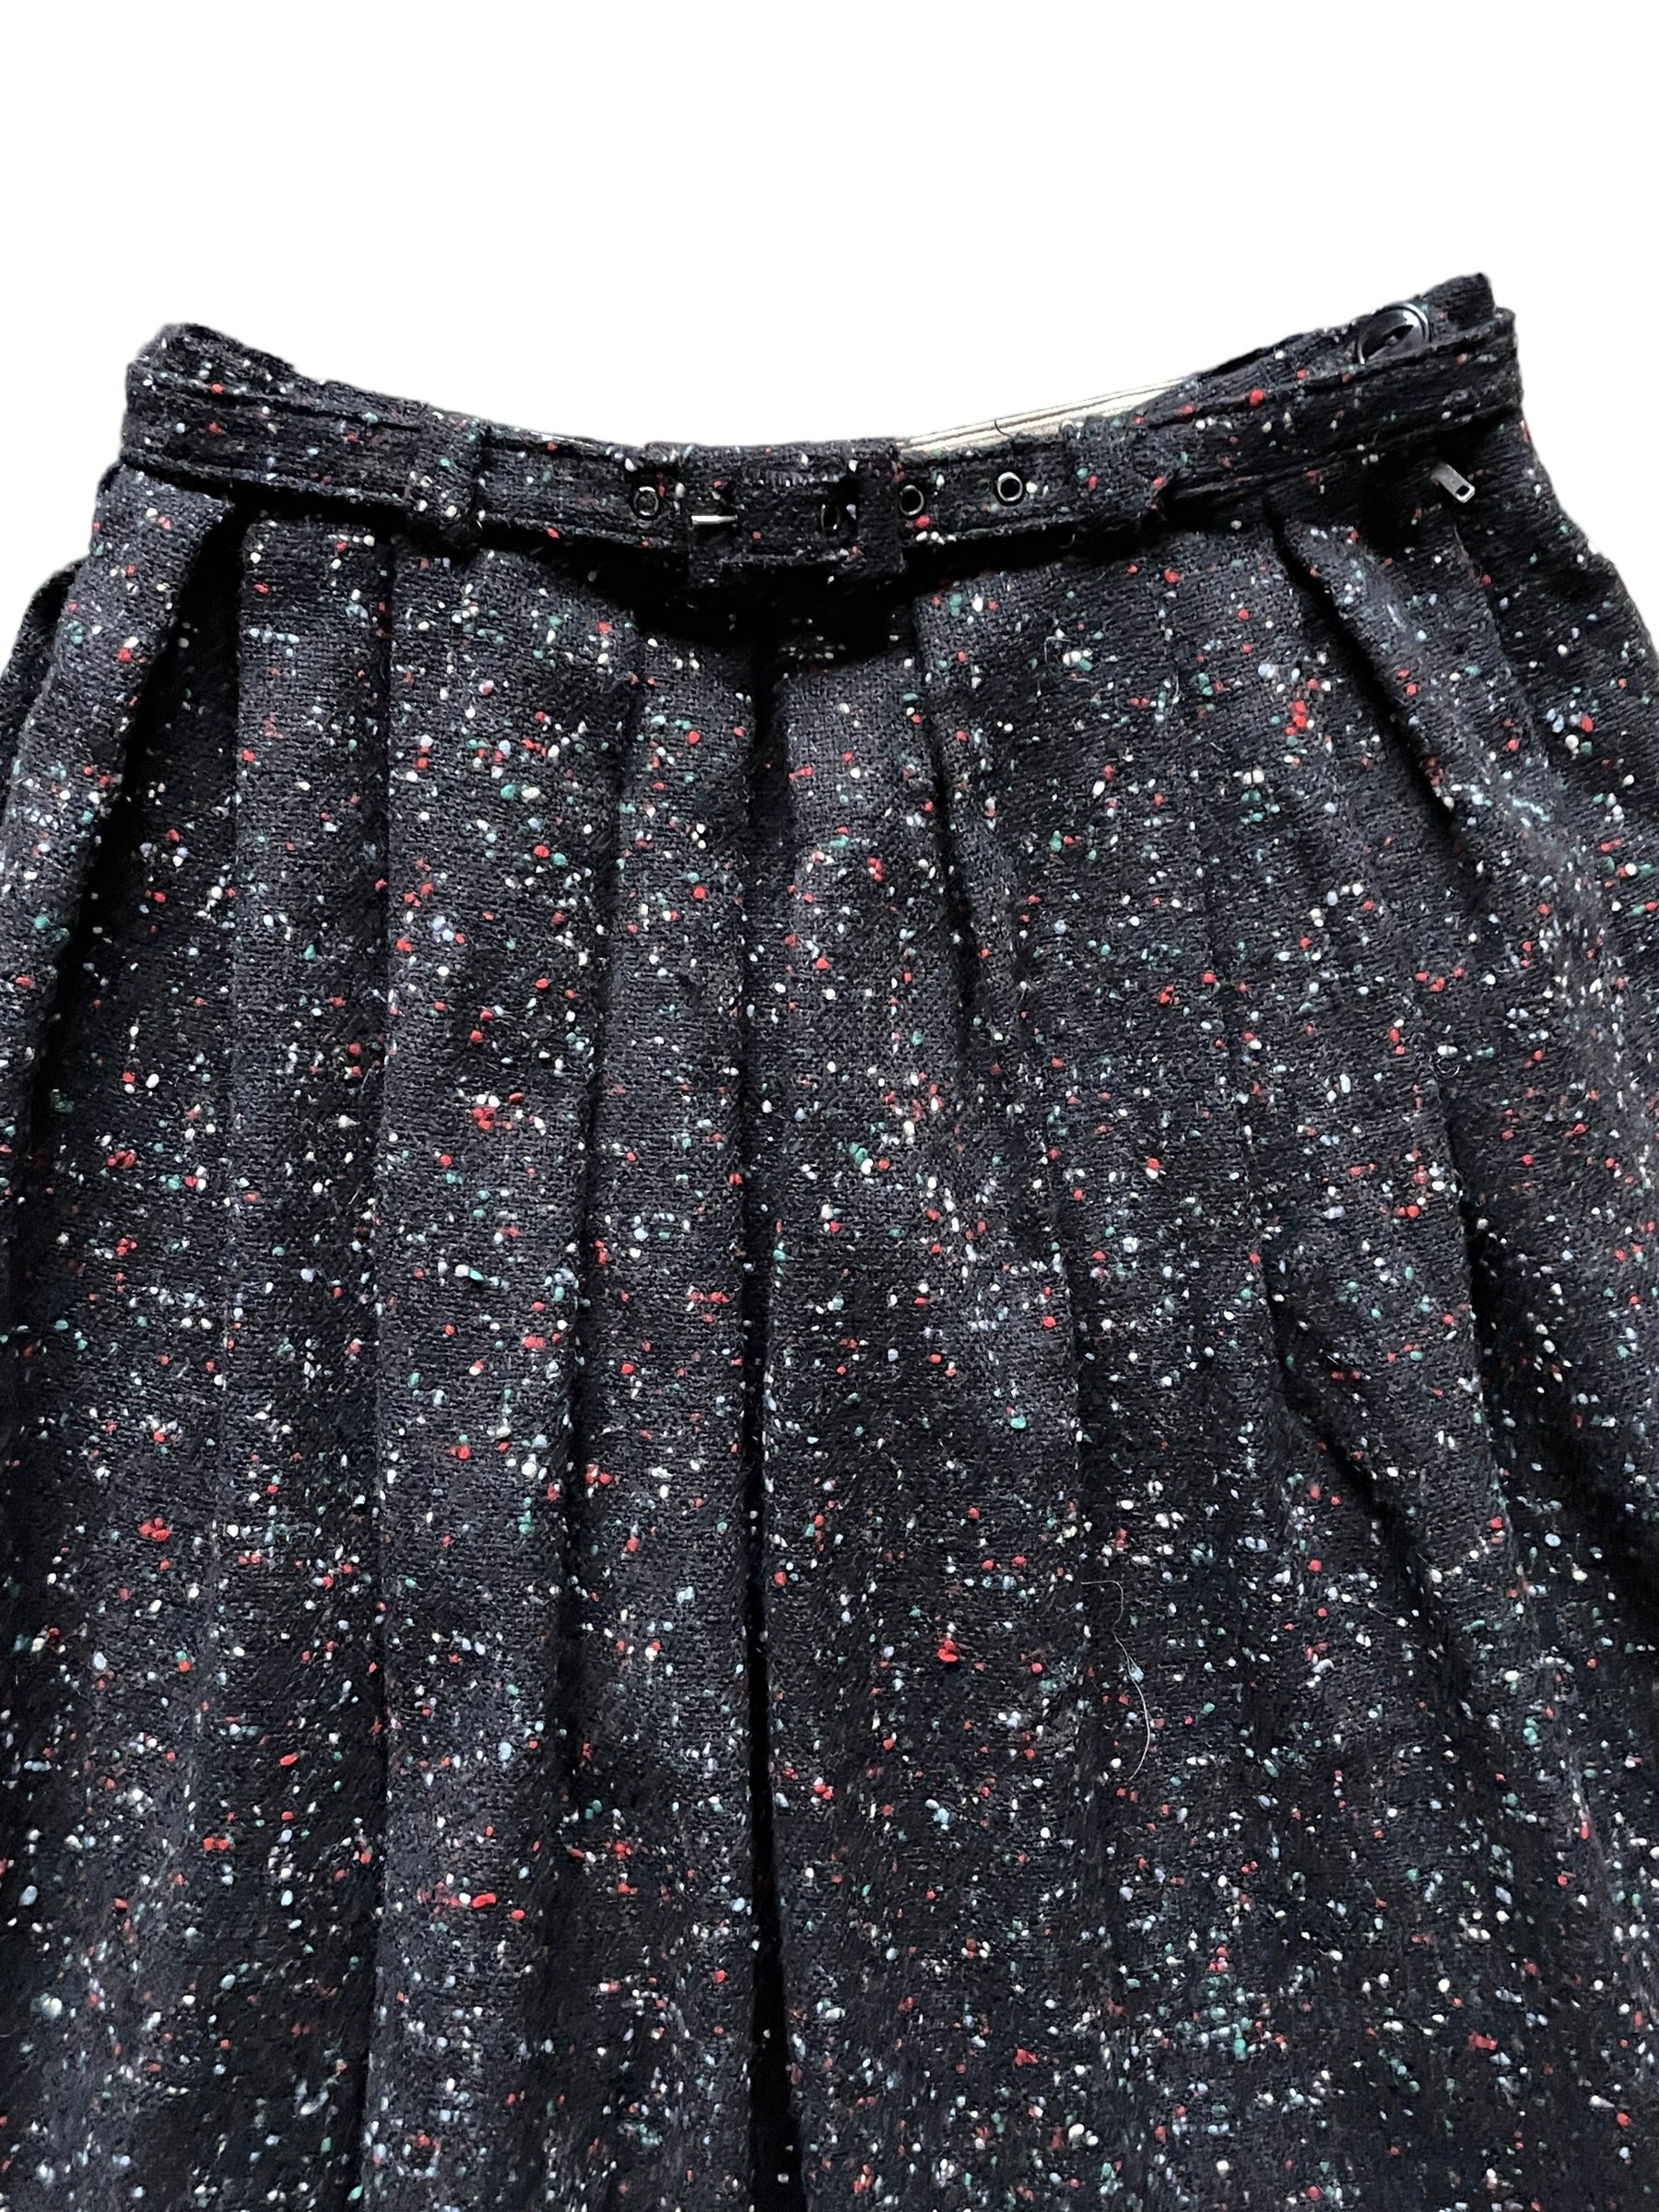 Front waist view of Vintage 1950s Black Wool Flecked Skirt SZ S | Barn Owl Seattle | Ladies True Vintage Skirts